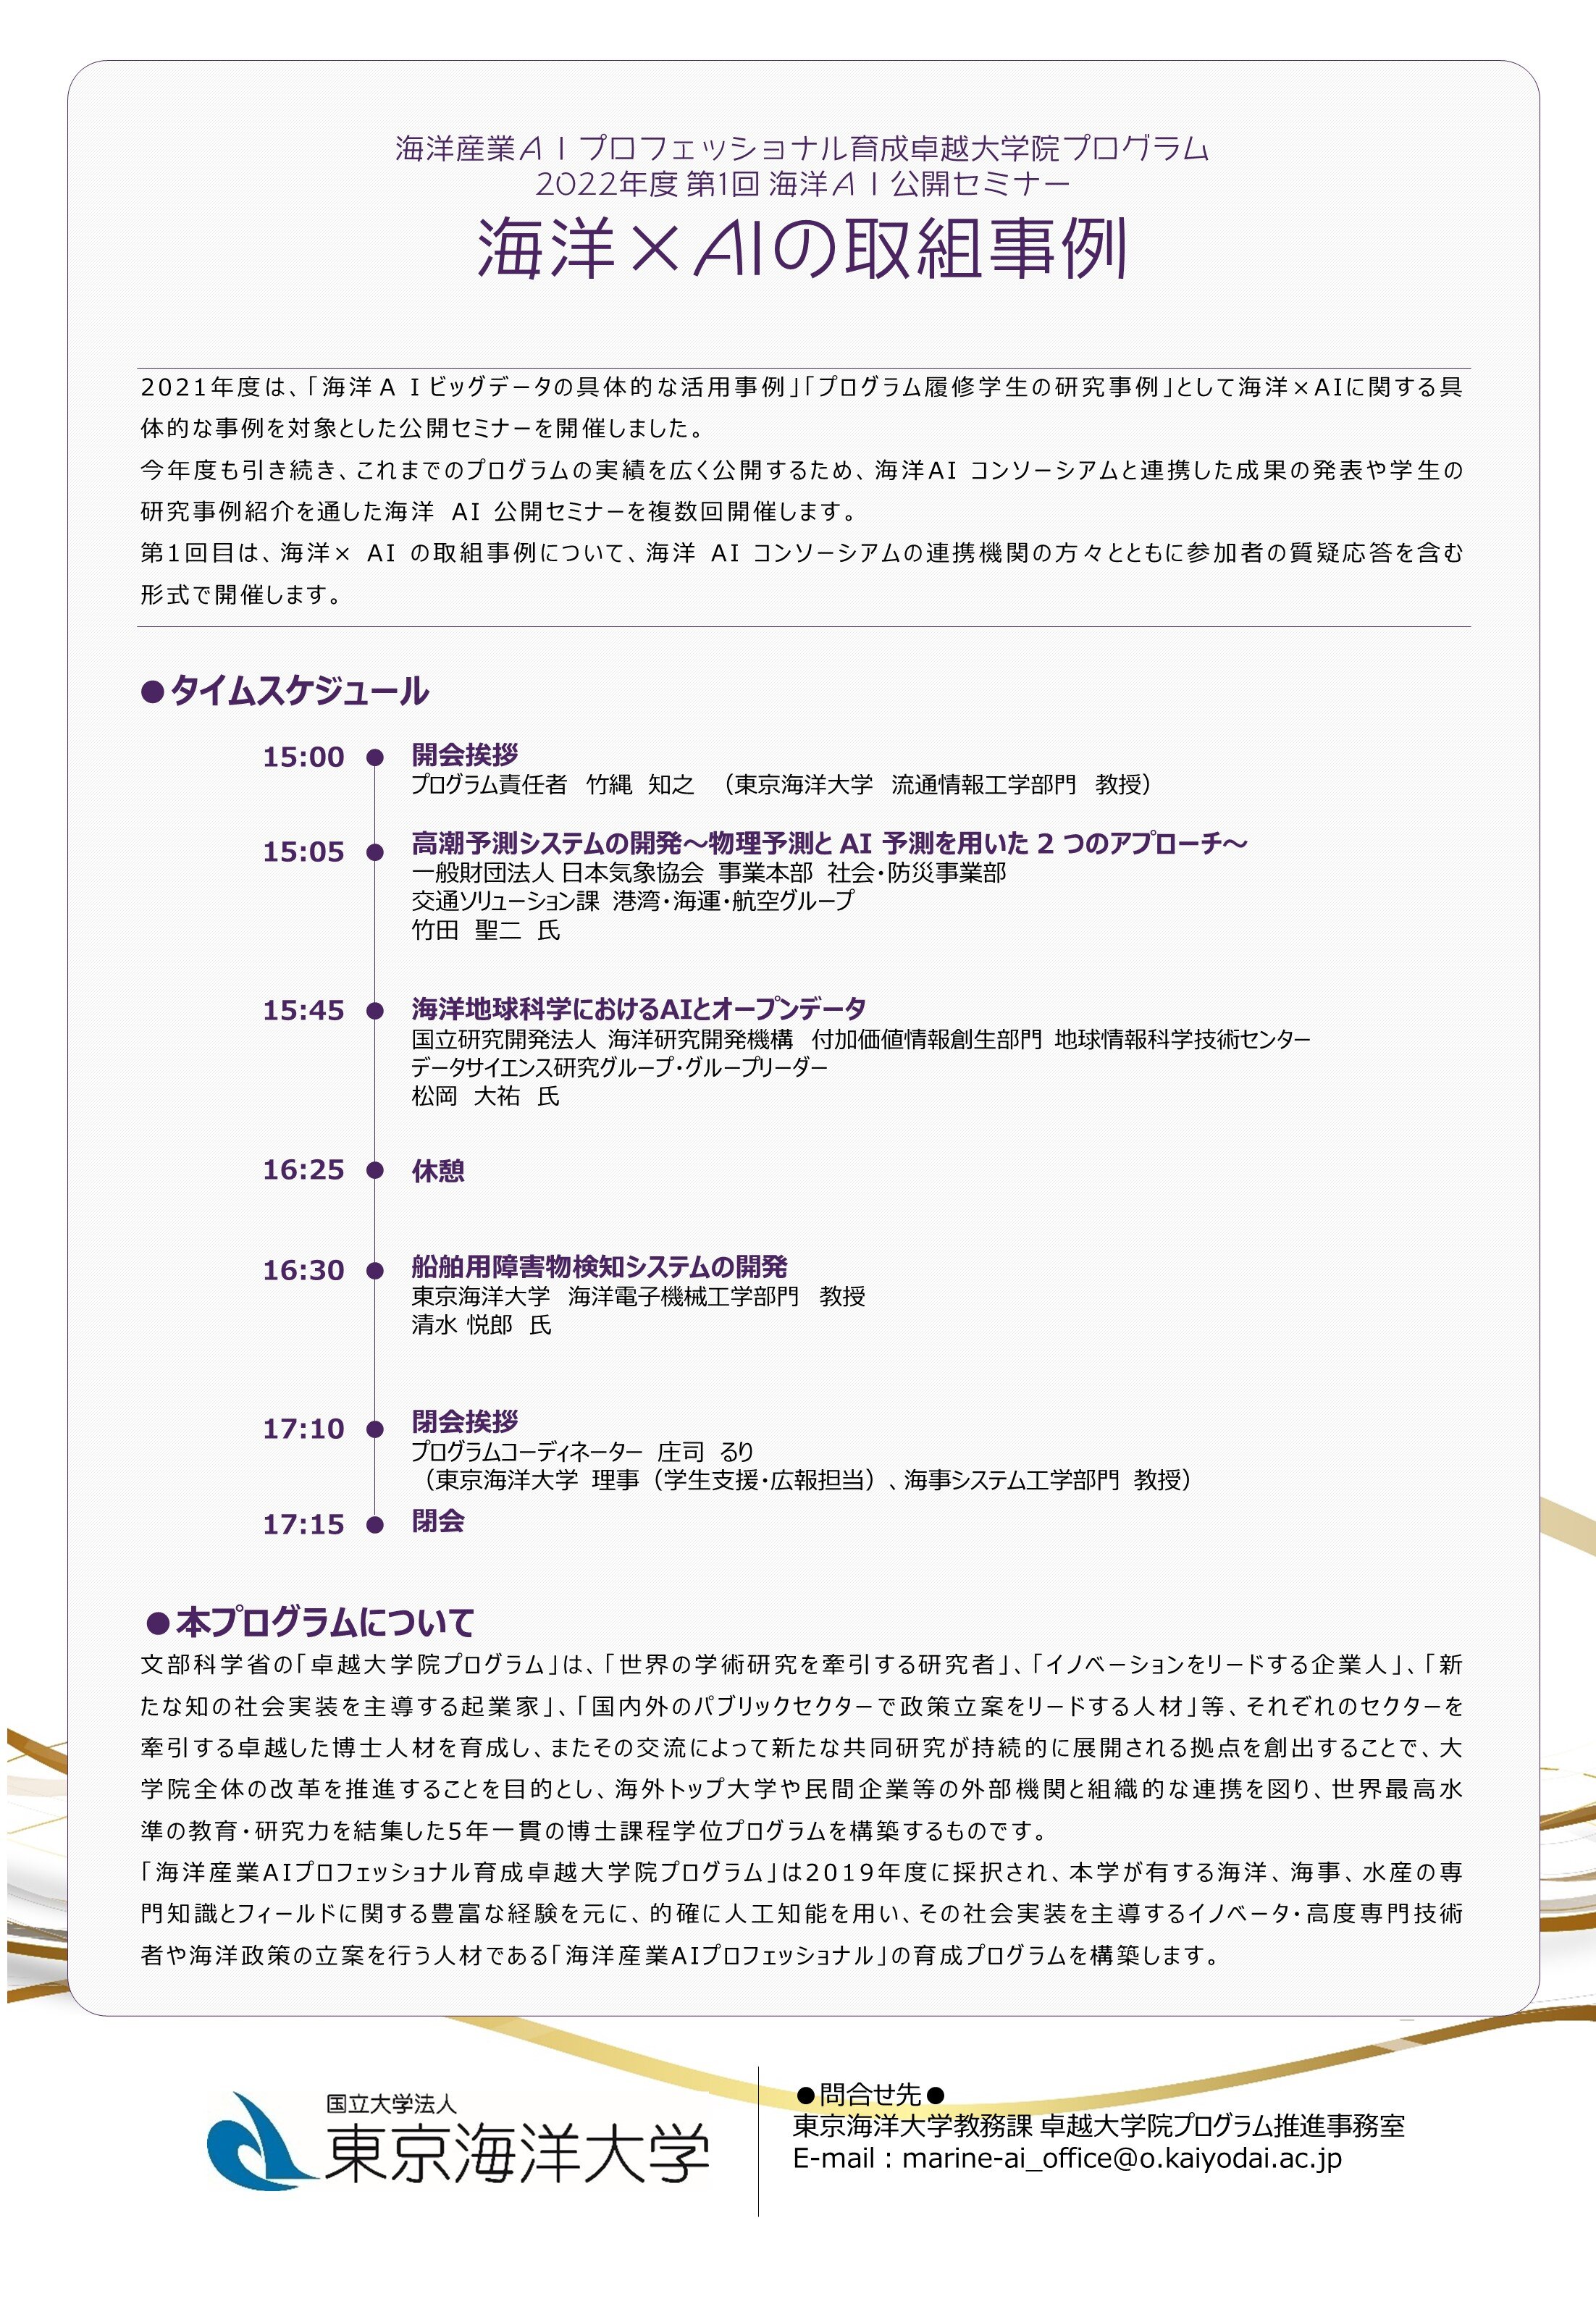 https://www.g2.kaiyodai.ac.jp/marine-ai/eng/news/img/news/slide2.jpg